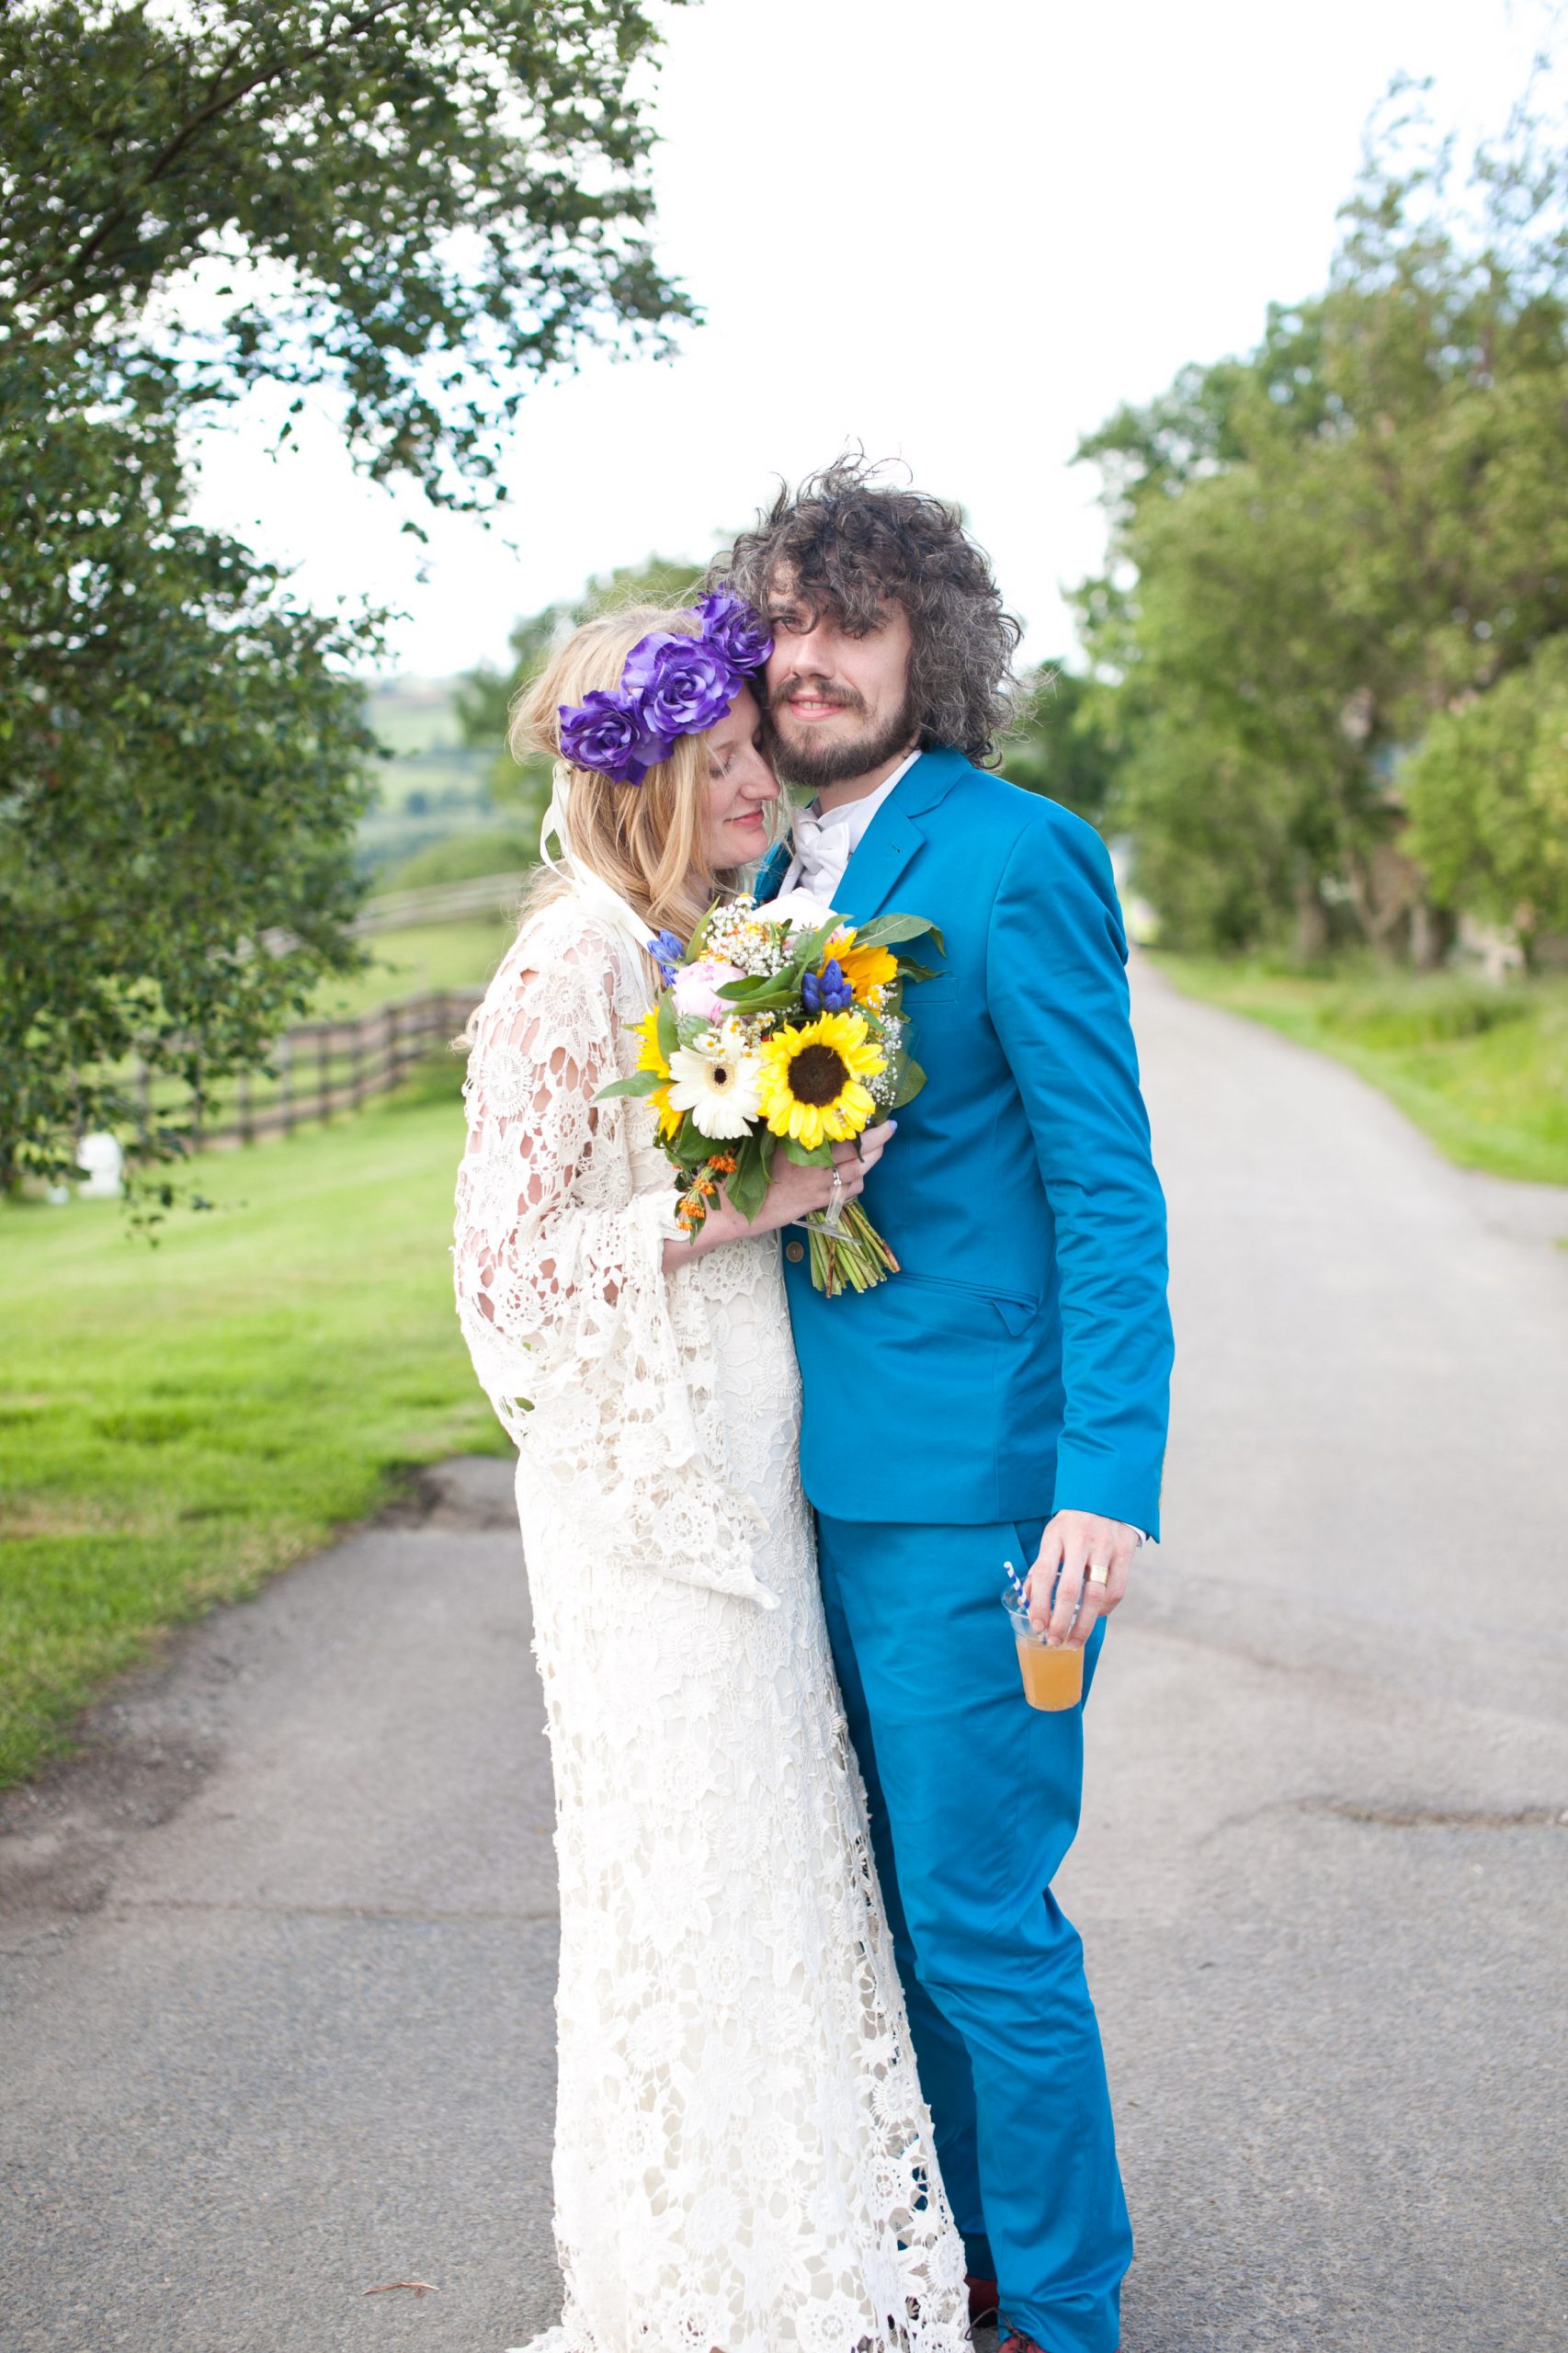 A Hippie Inspired Wedding in London